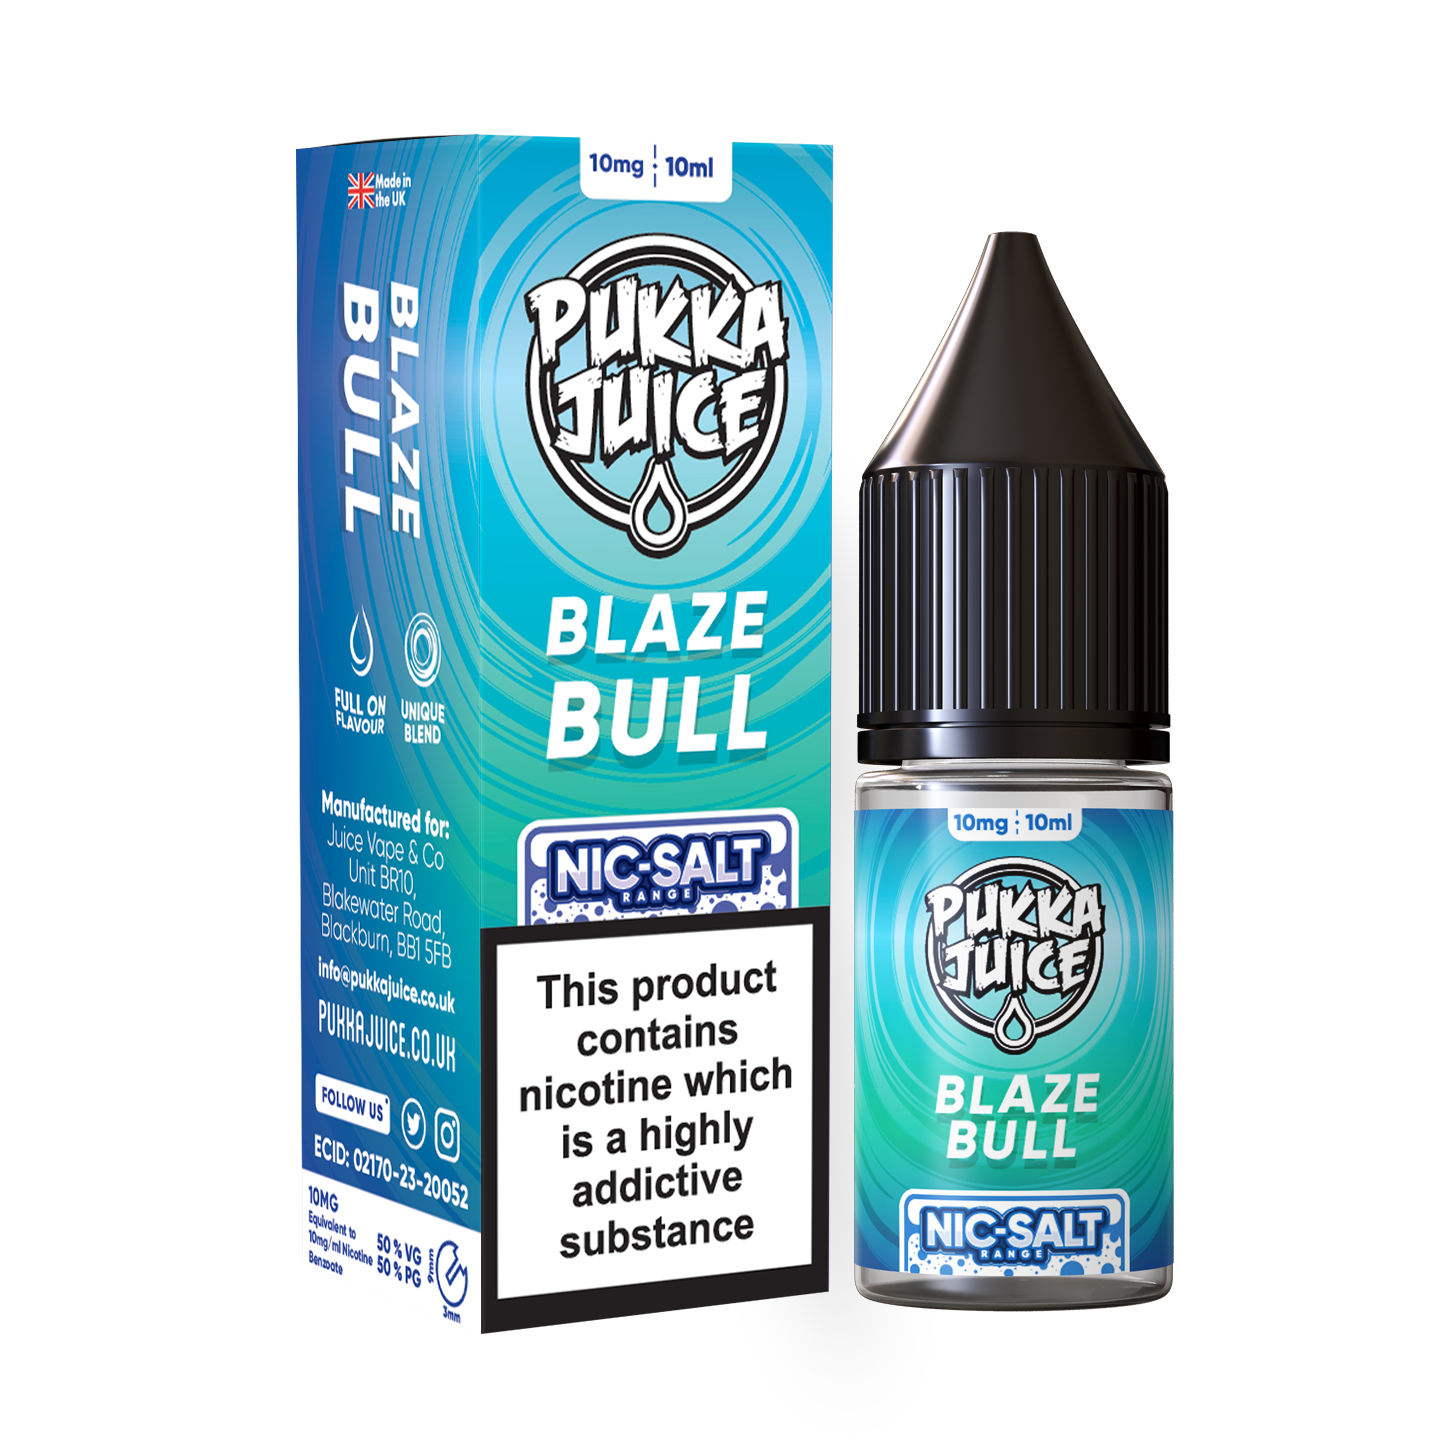 Product Image Of Blaze Bull Nic Salt E-Liquid By Pukka Juice